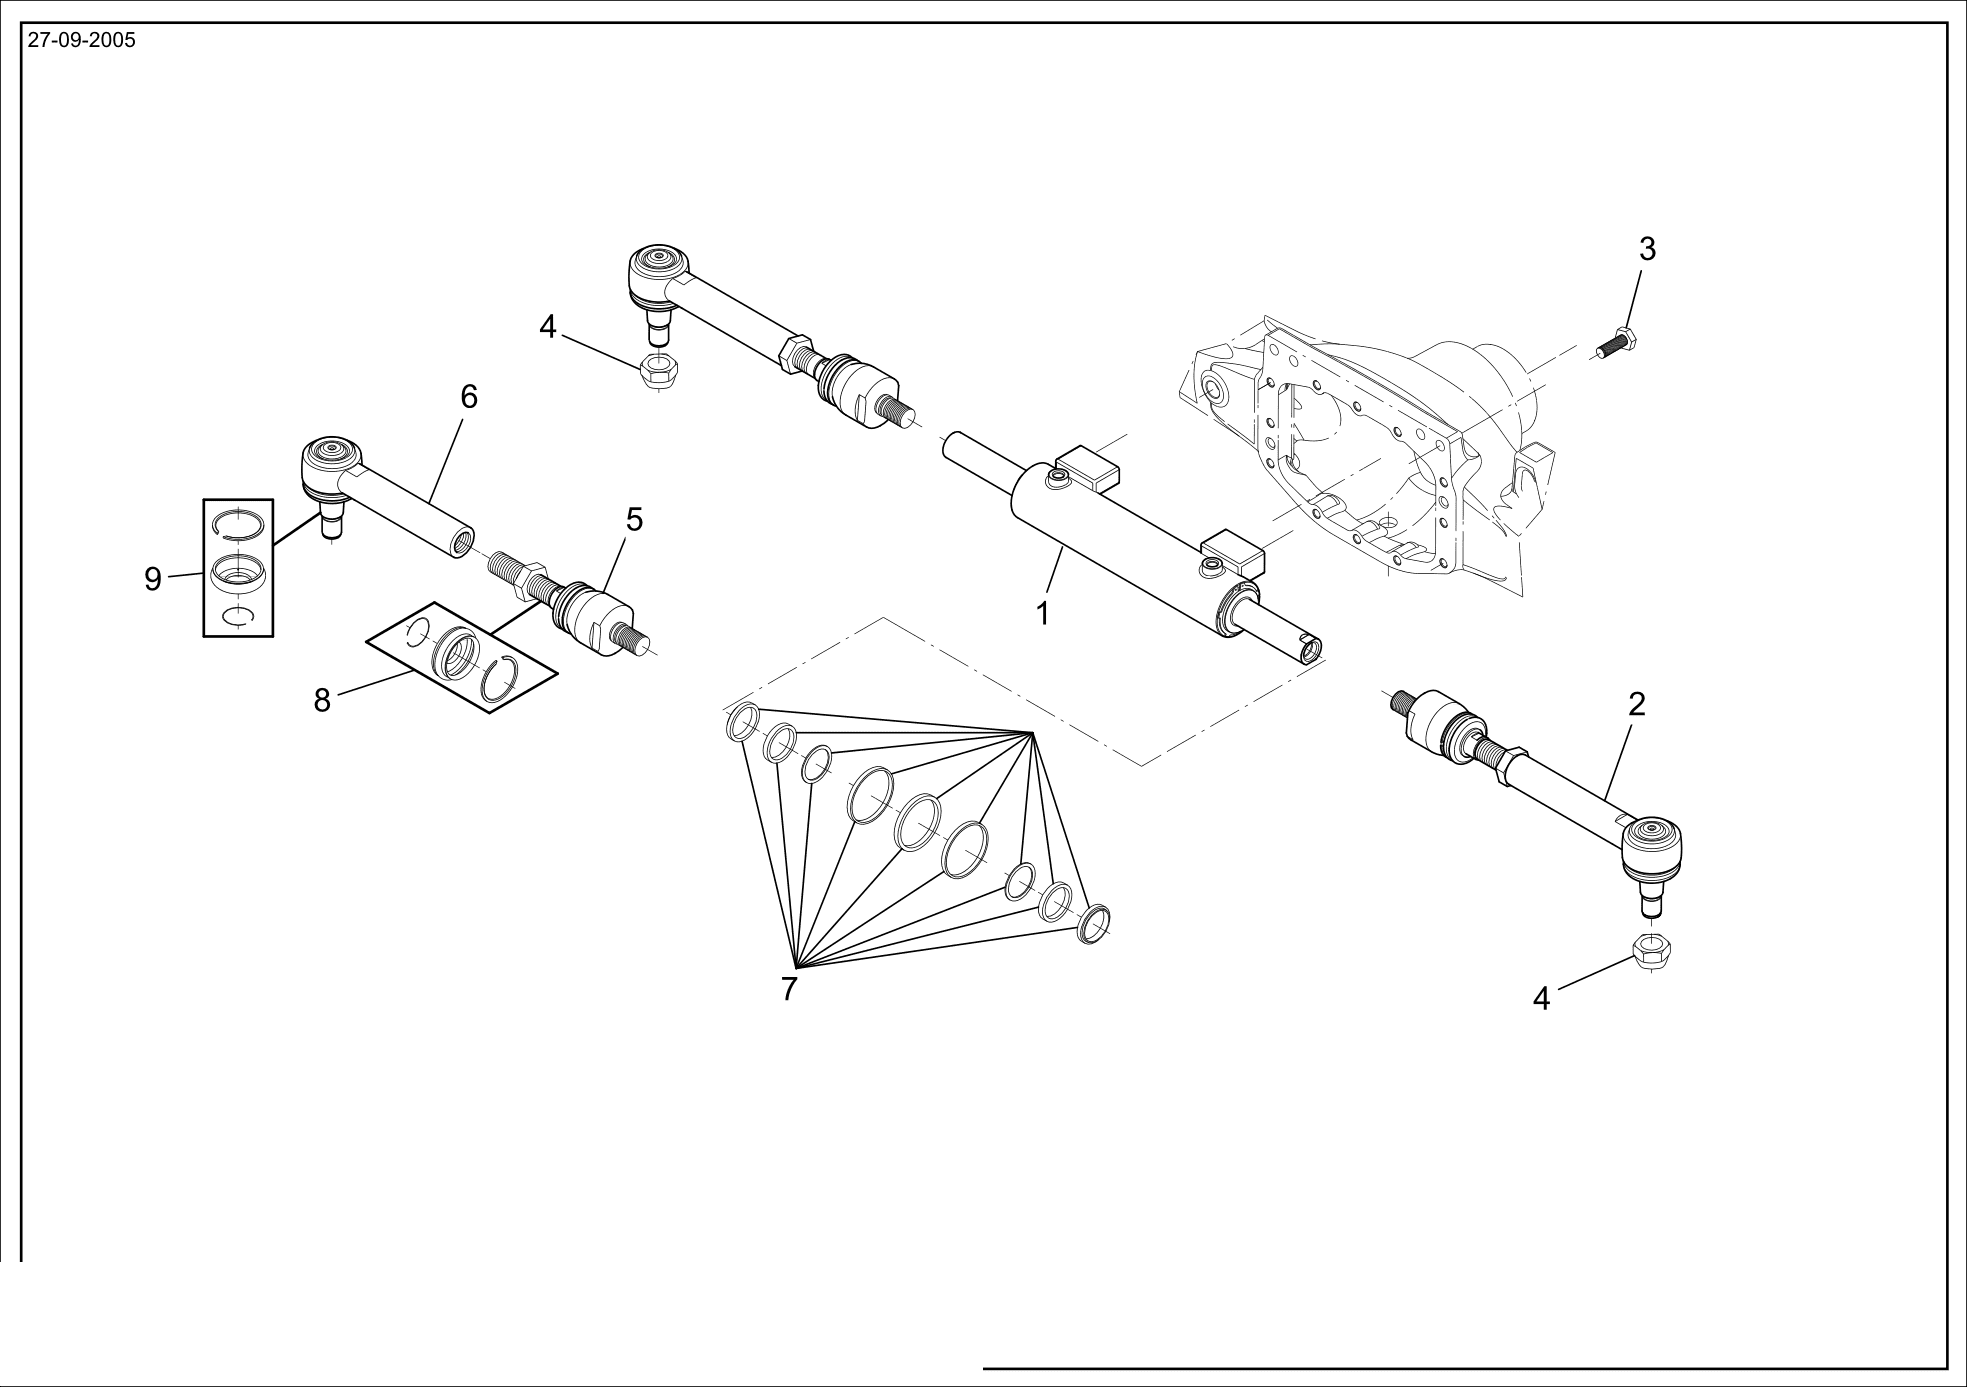 drawing for ERKUNT Y01196 - ARTICULATED TIE ROD (figure 2)